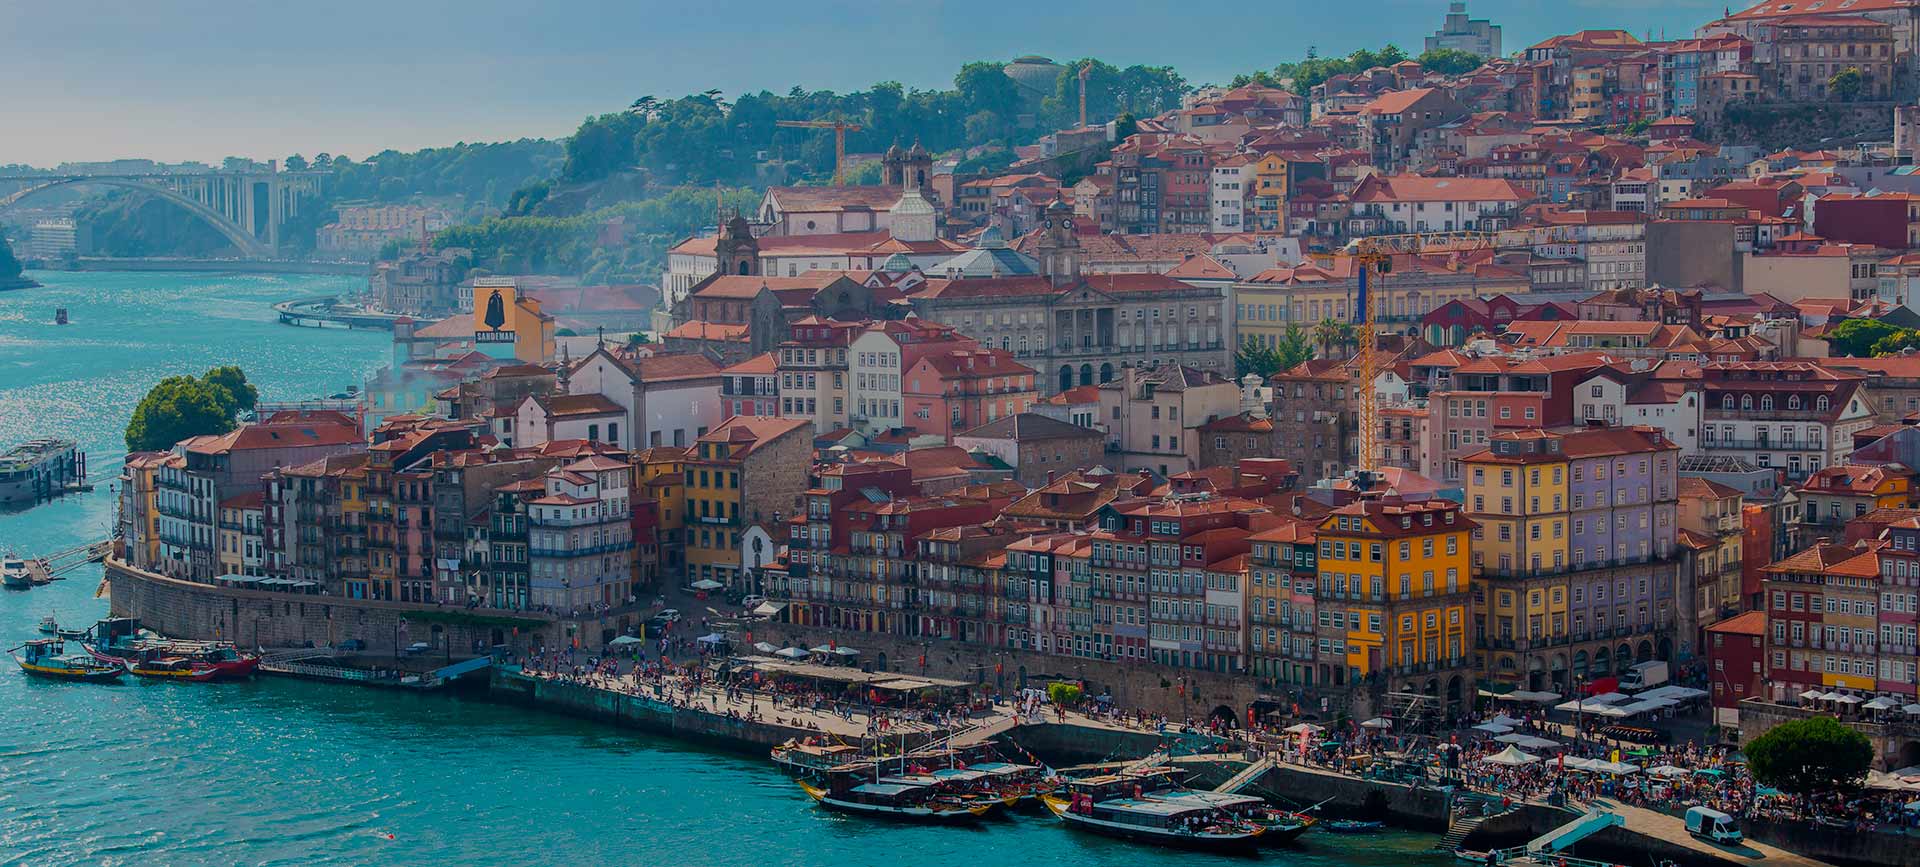 The perfect day at Porto